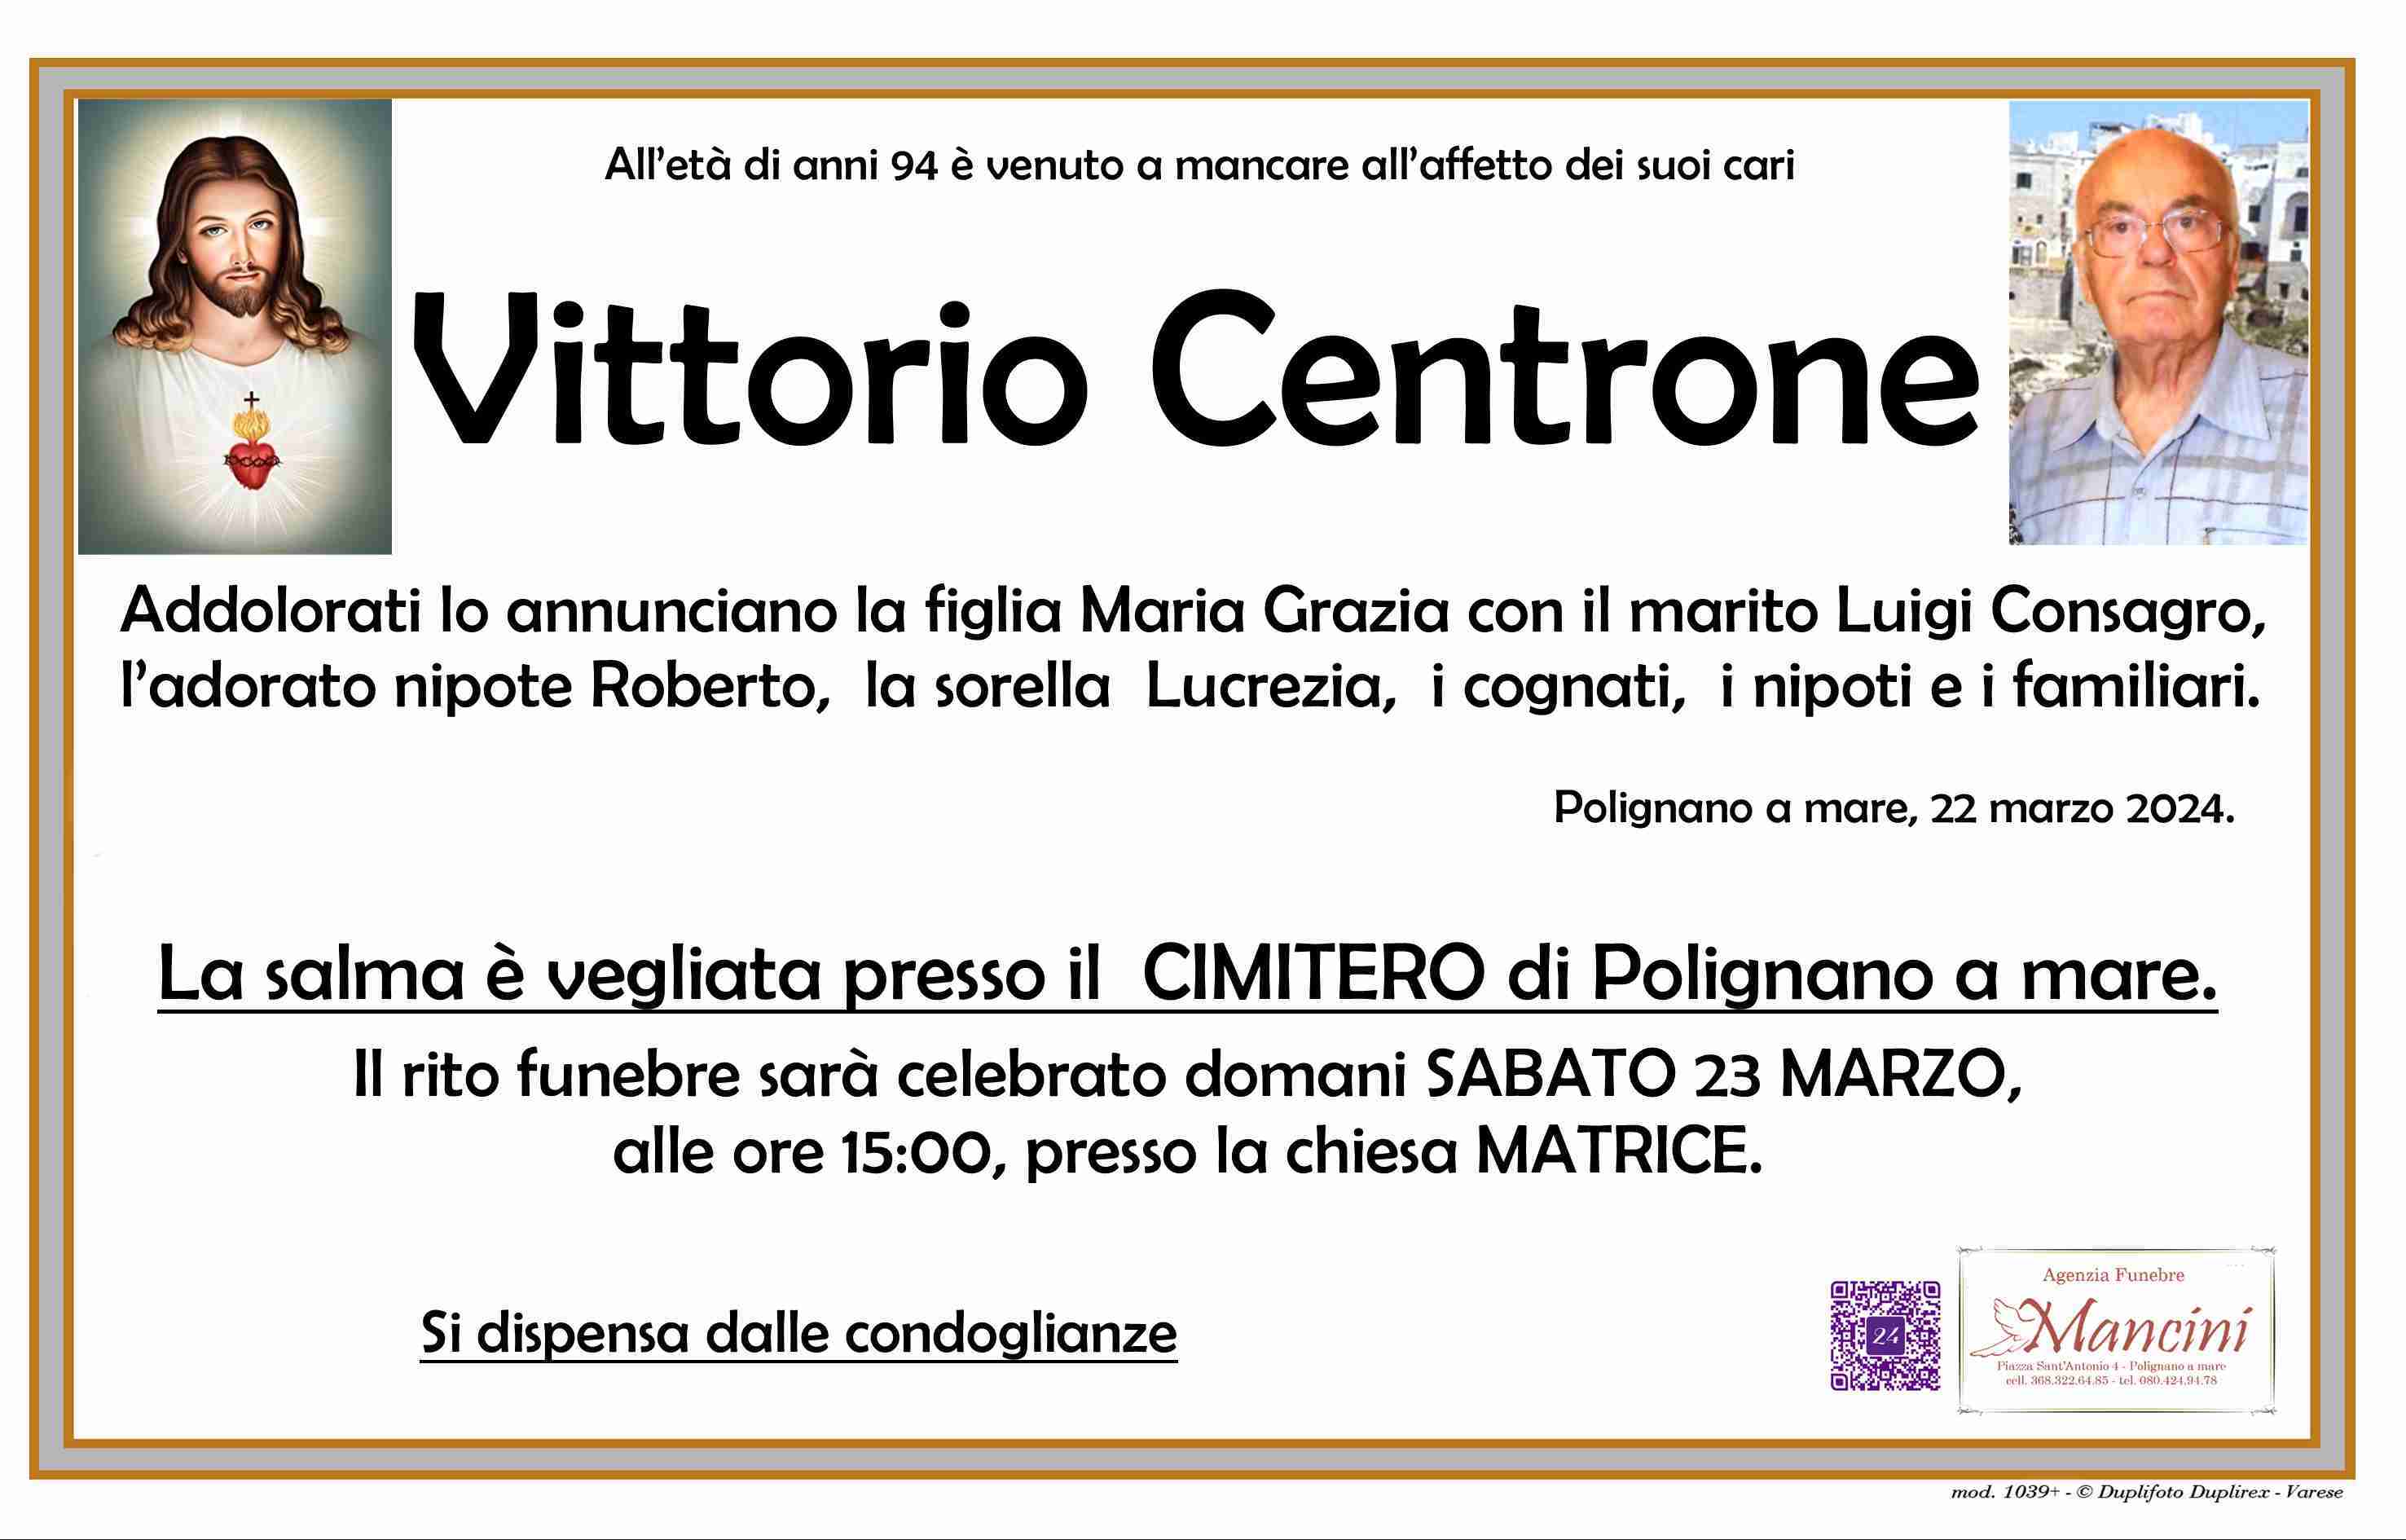 Vittorio Centrone